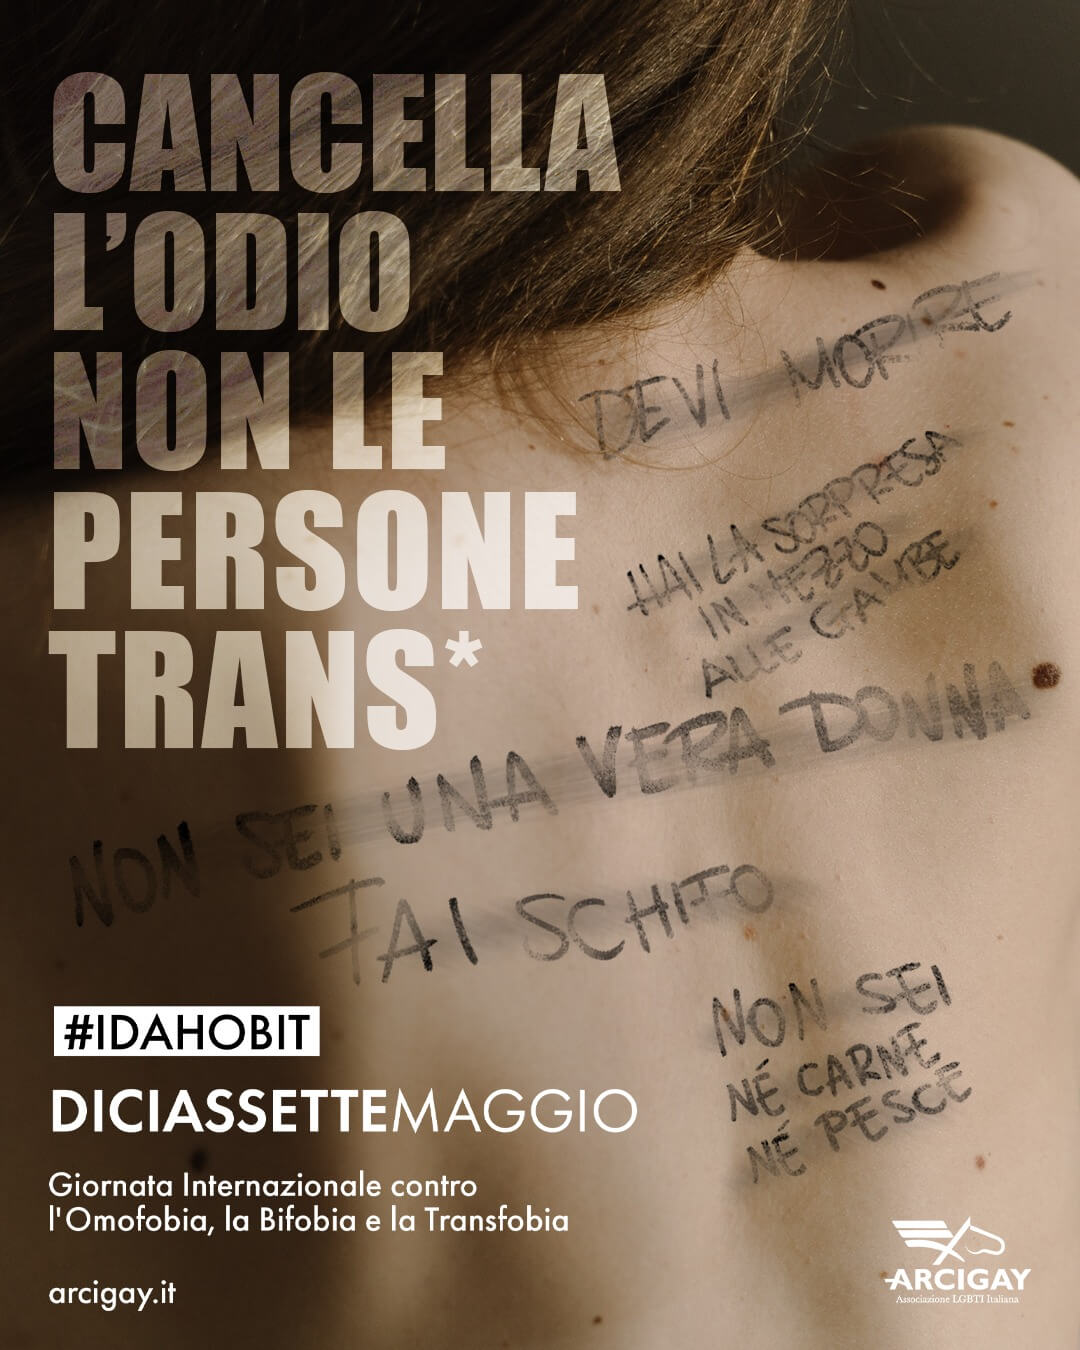 Omobitransfobia, la nuova campagna Arcigay: "Cancella l'odio, non le persone LGBTQIA+" - arcigay omofobia 1 - Gay.it